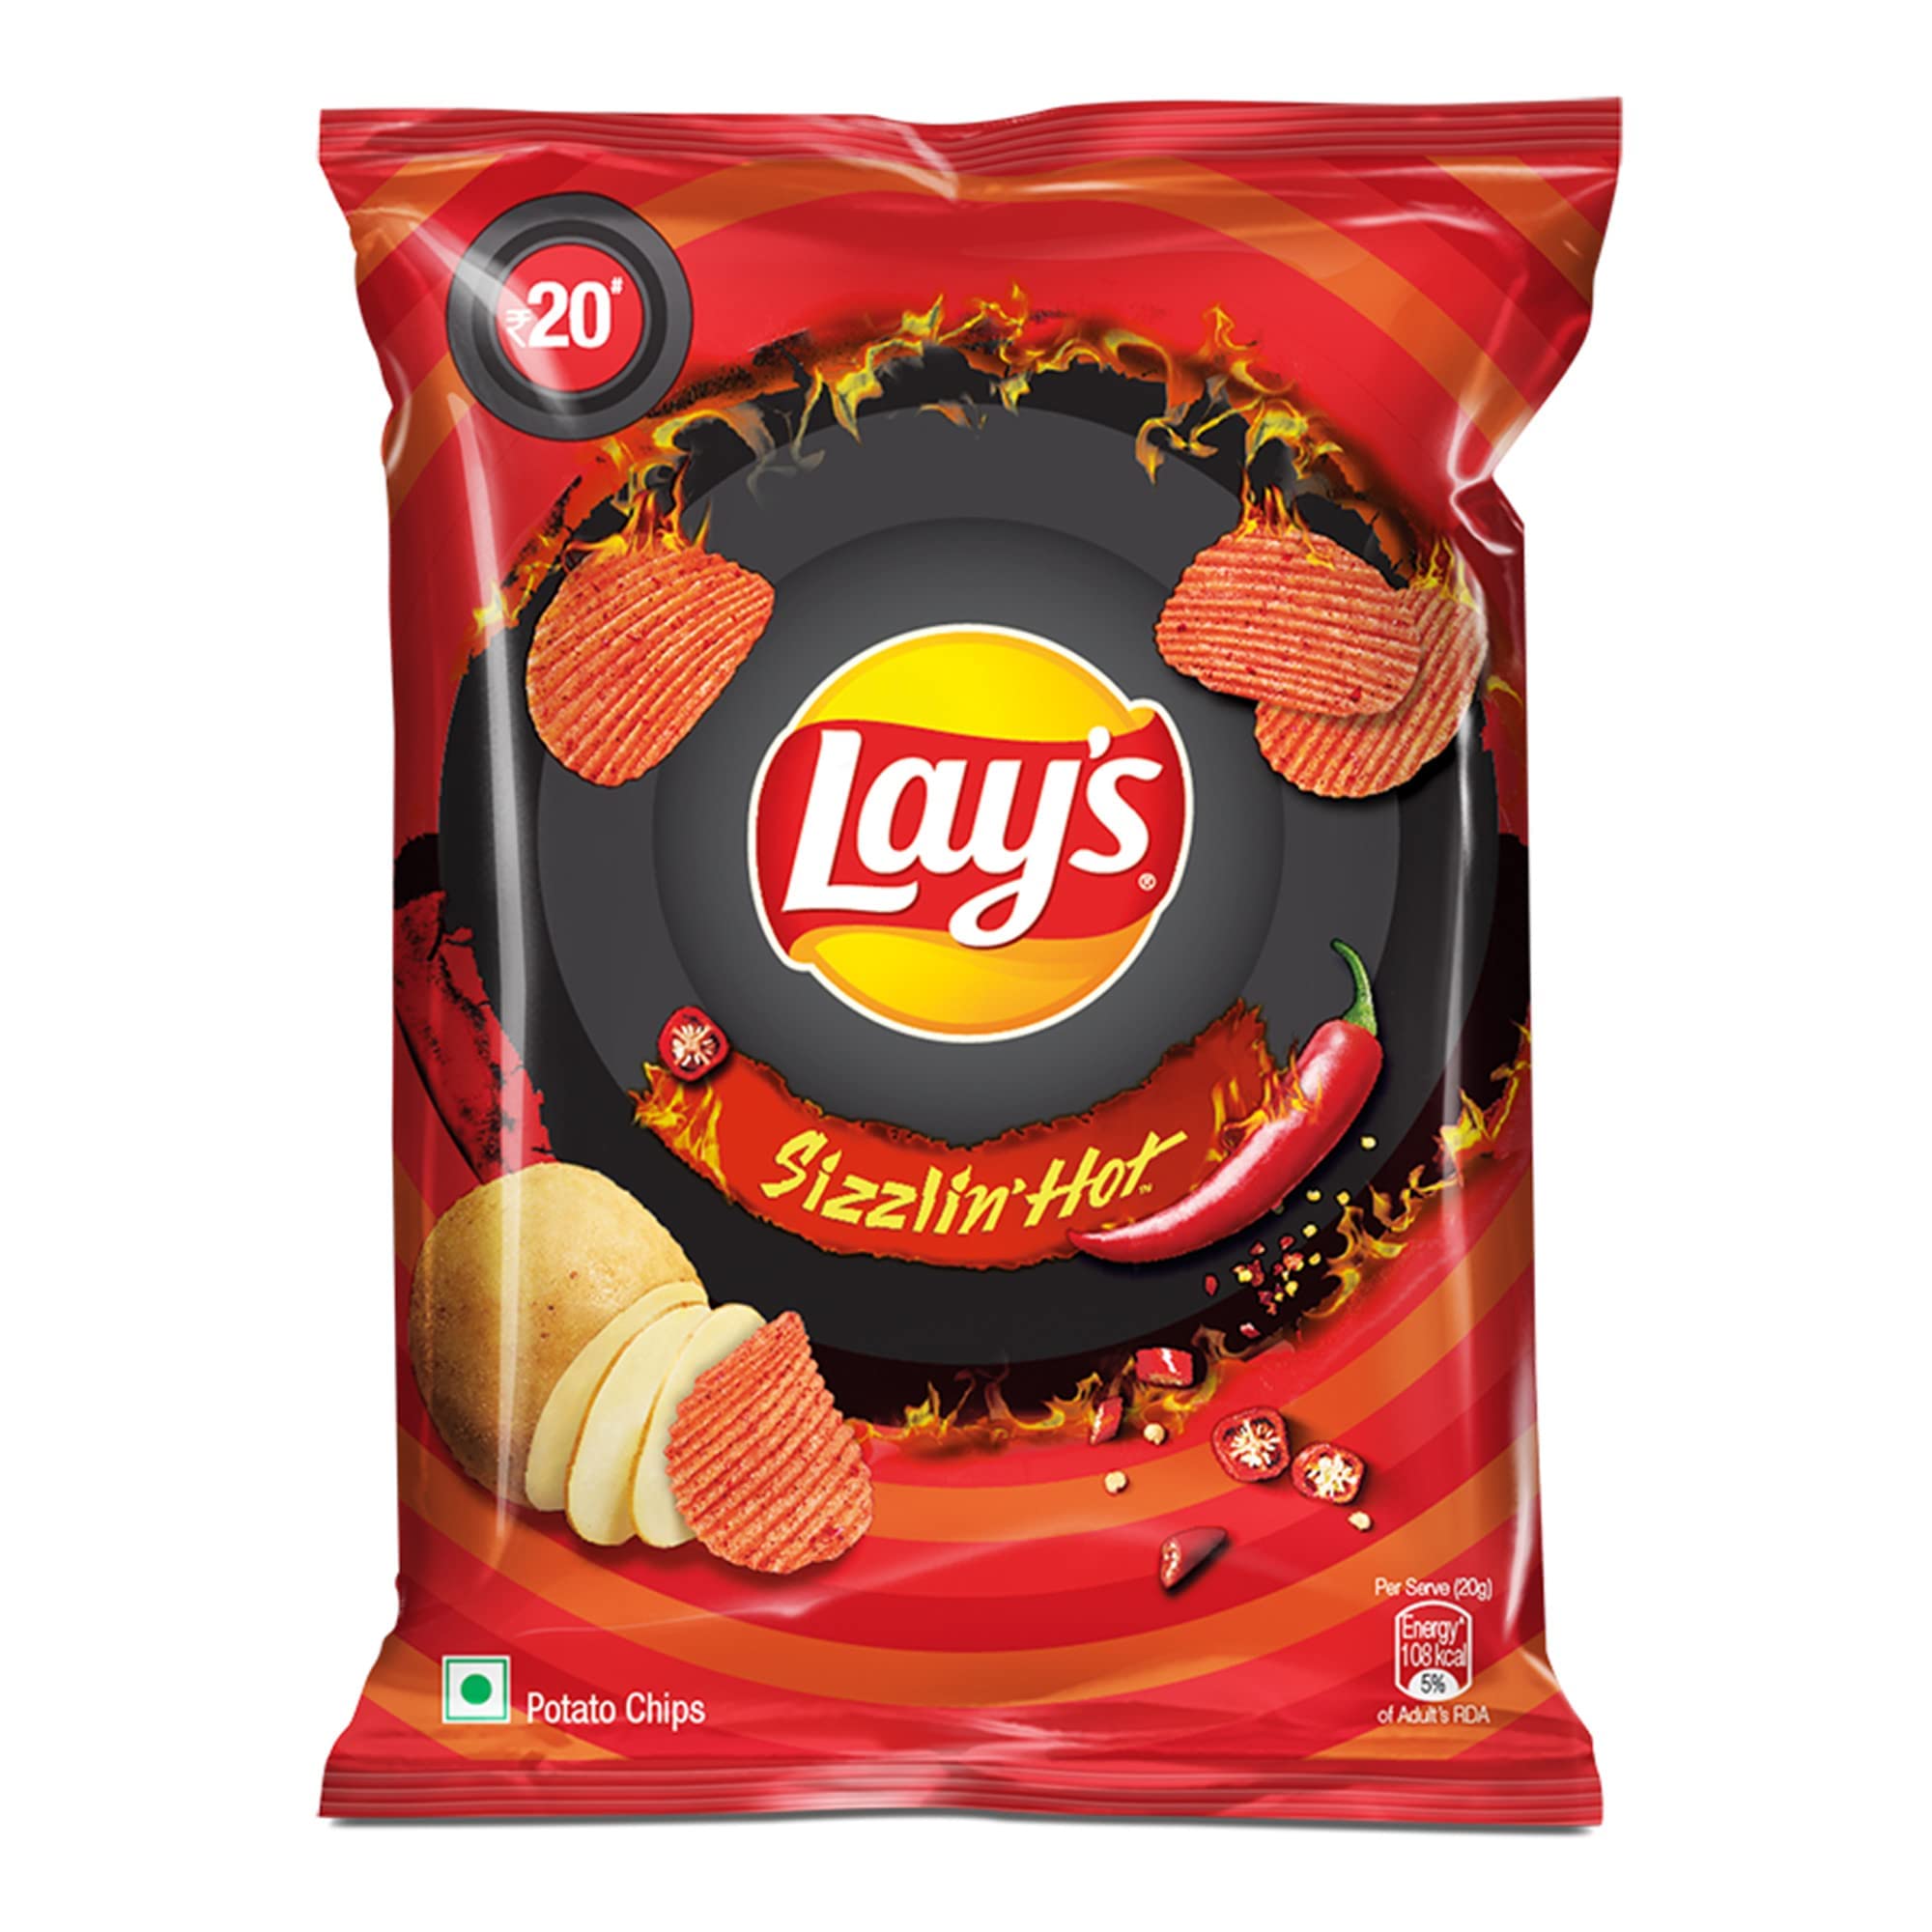 Lays Potato Chips - Sizzlin Hot